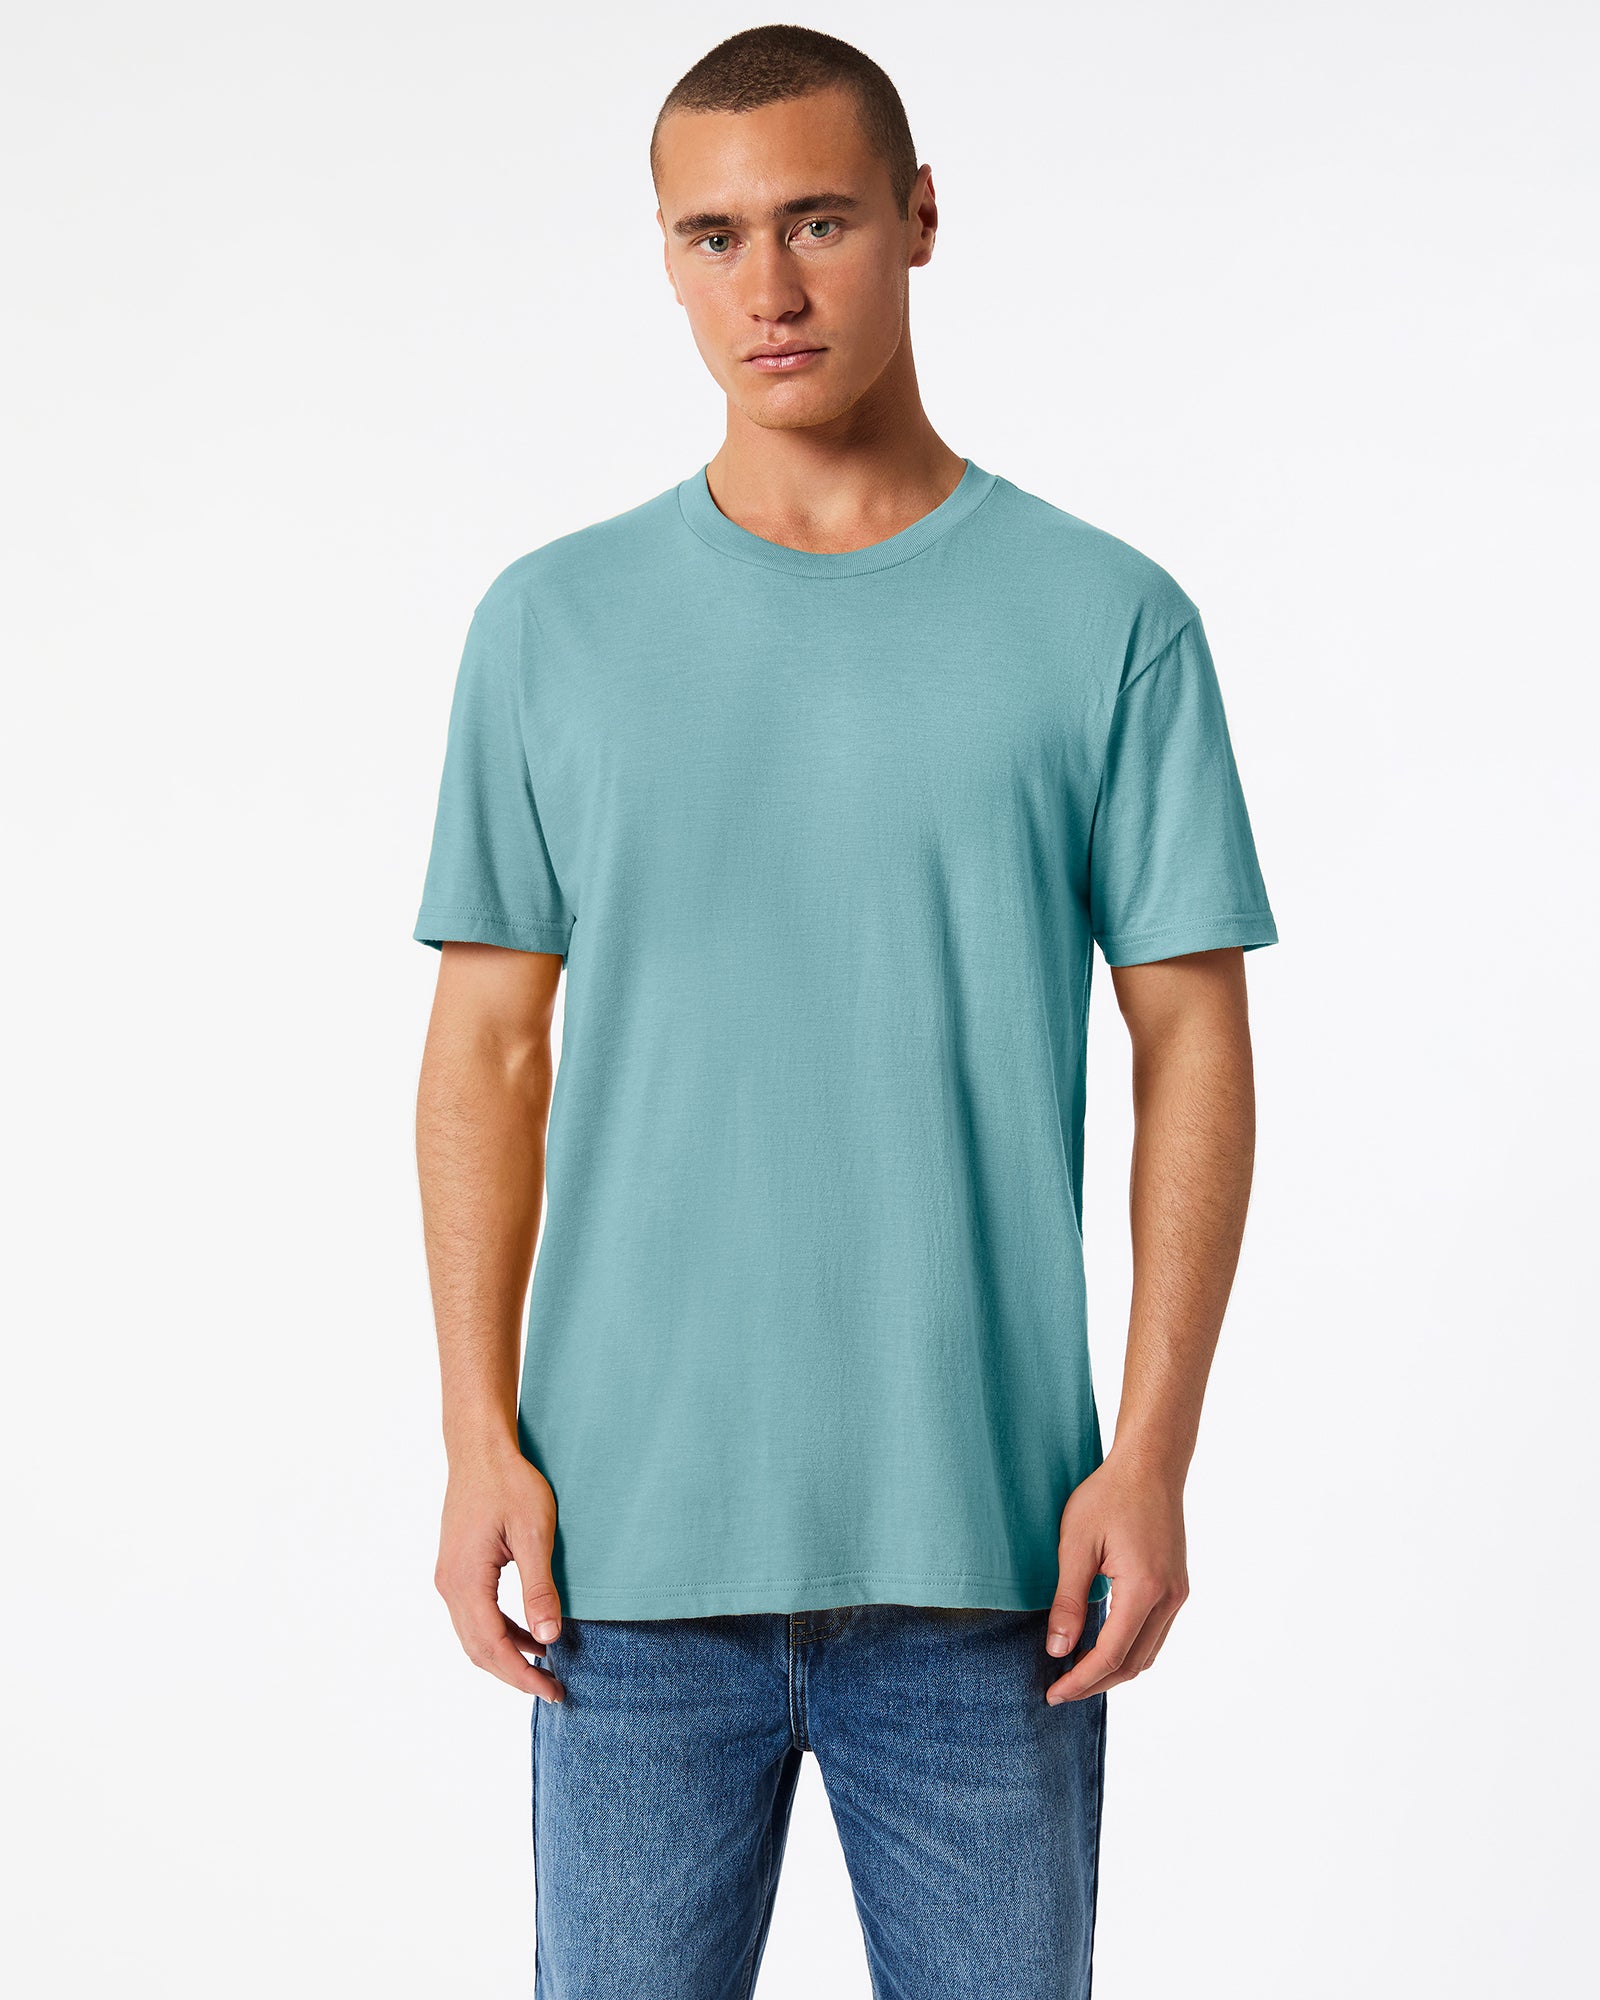 CVC Unisex Short Sleeve T-Shirt - Arctic